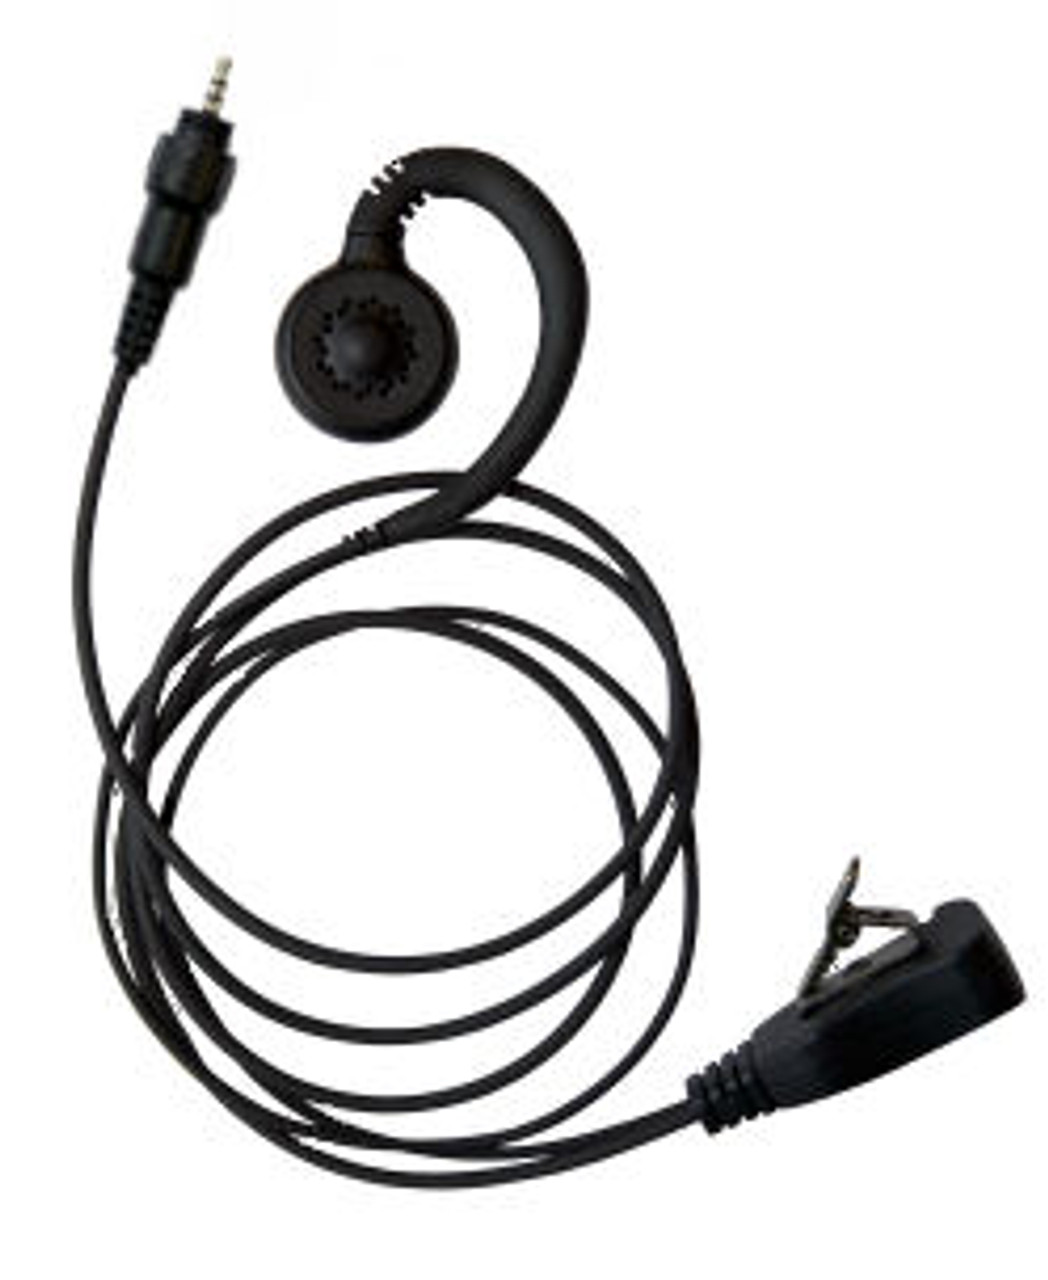 Impact S1W-EH5-M16 Surveillance Headset for CLP - HiTech Wireless Store ...